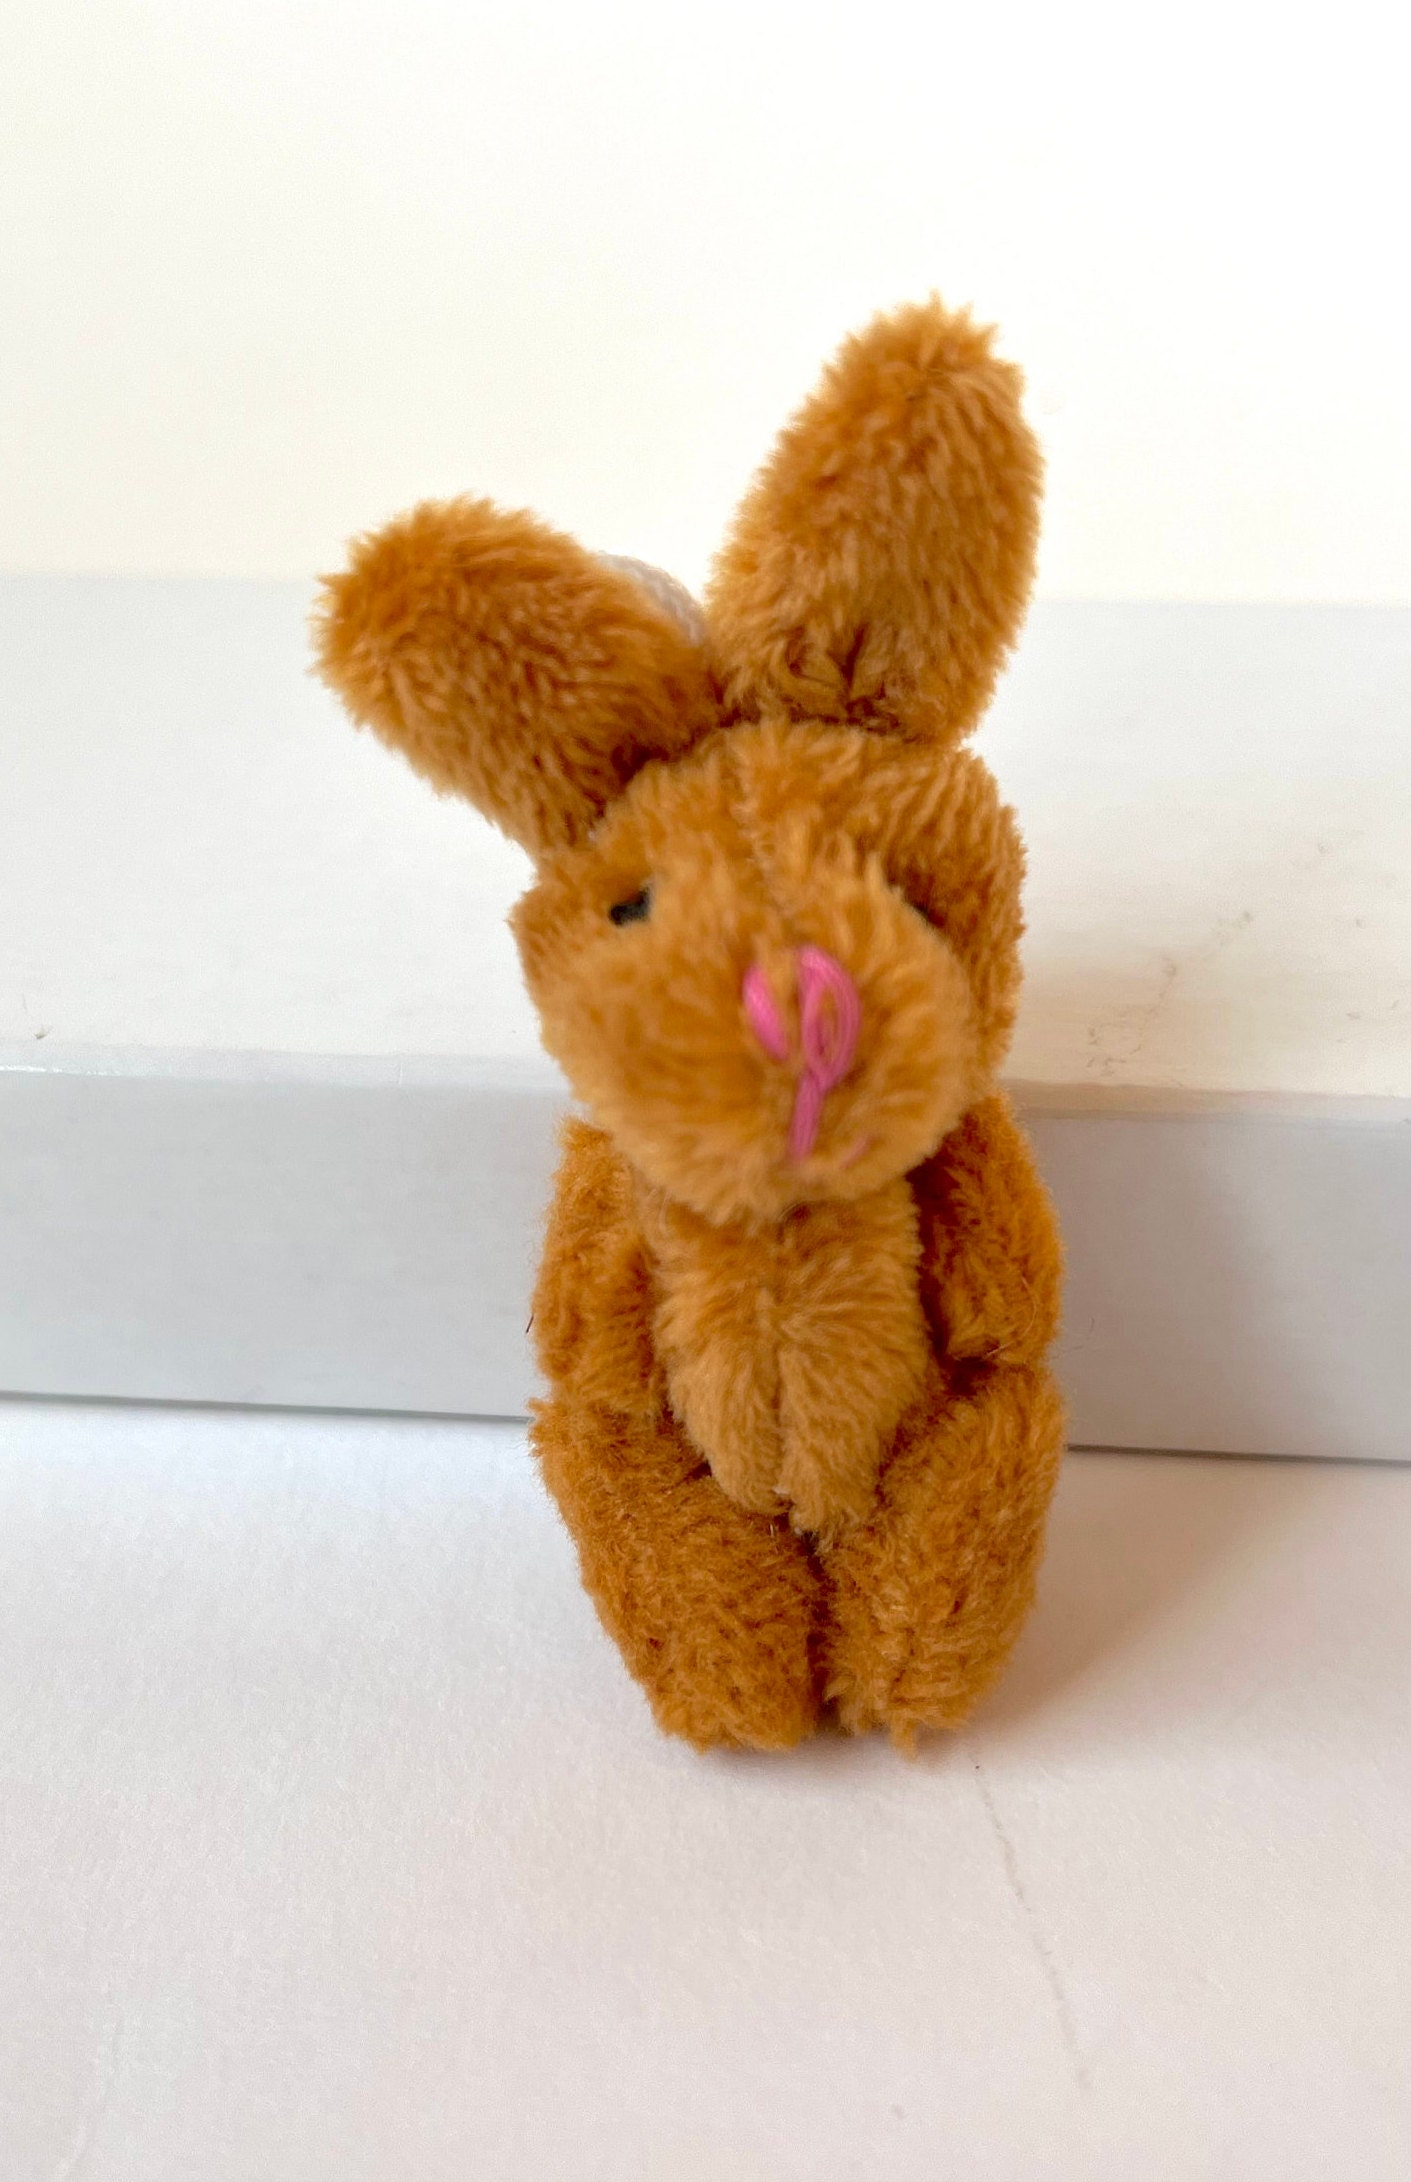 New Jojo Maman Bebe Pink Bunny Rabbit Lovey Plush Doll Toy Baby